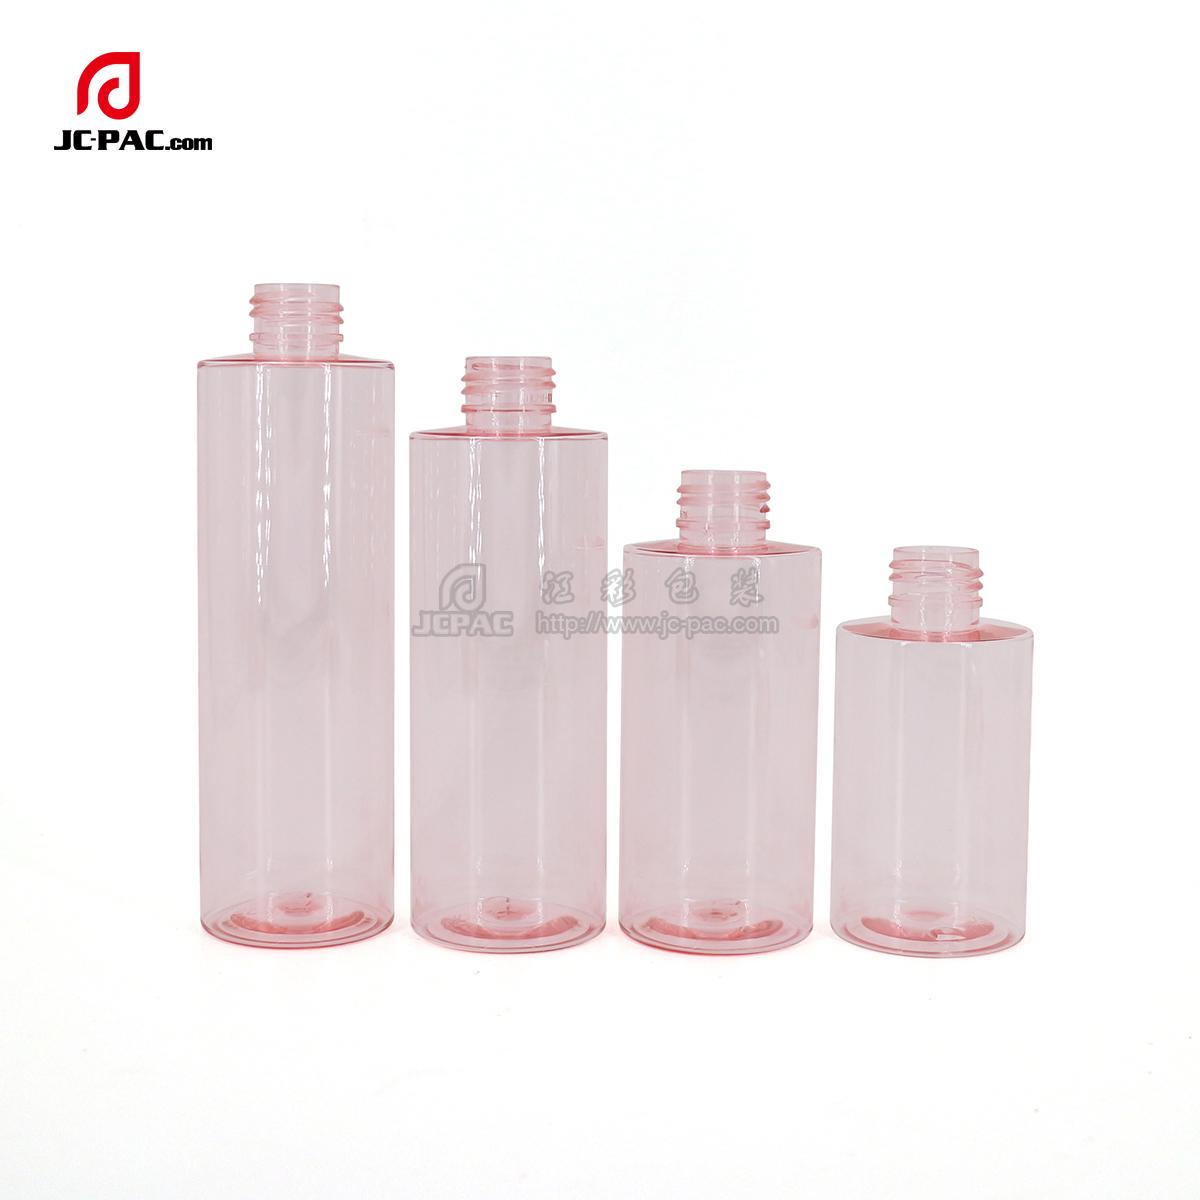 ZA2400595, ZA2000596, ZA1500597, ZA1200598  Round PET bottle Packaging Set,  Customized Design Bottle, Cosmetic Bottle, Lotion Bottle, Mist Sprayer Bottle